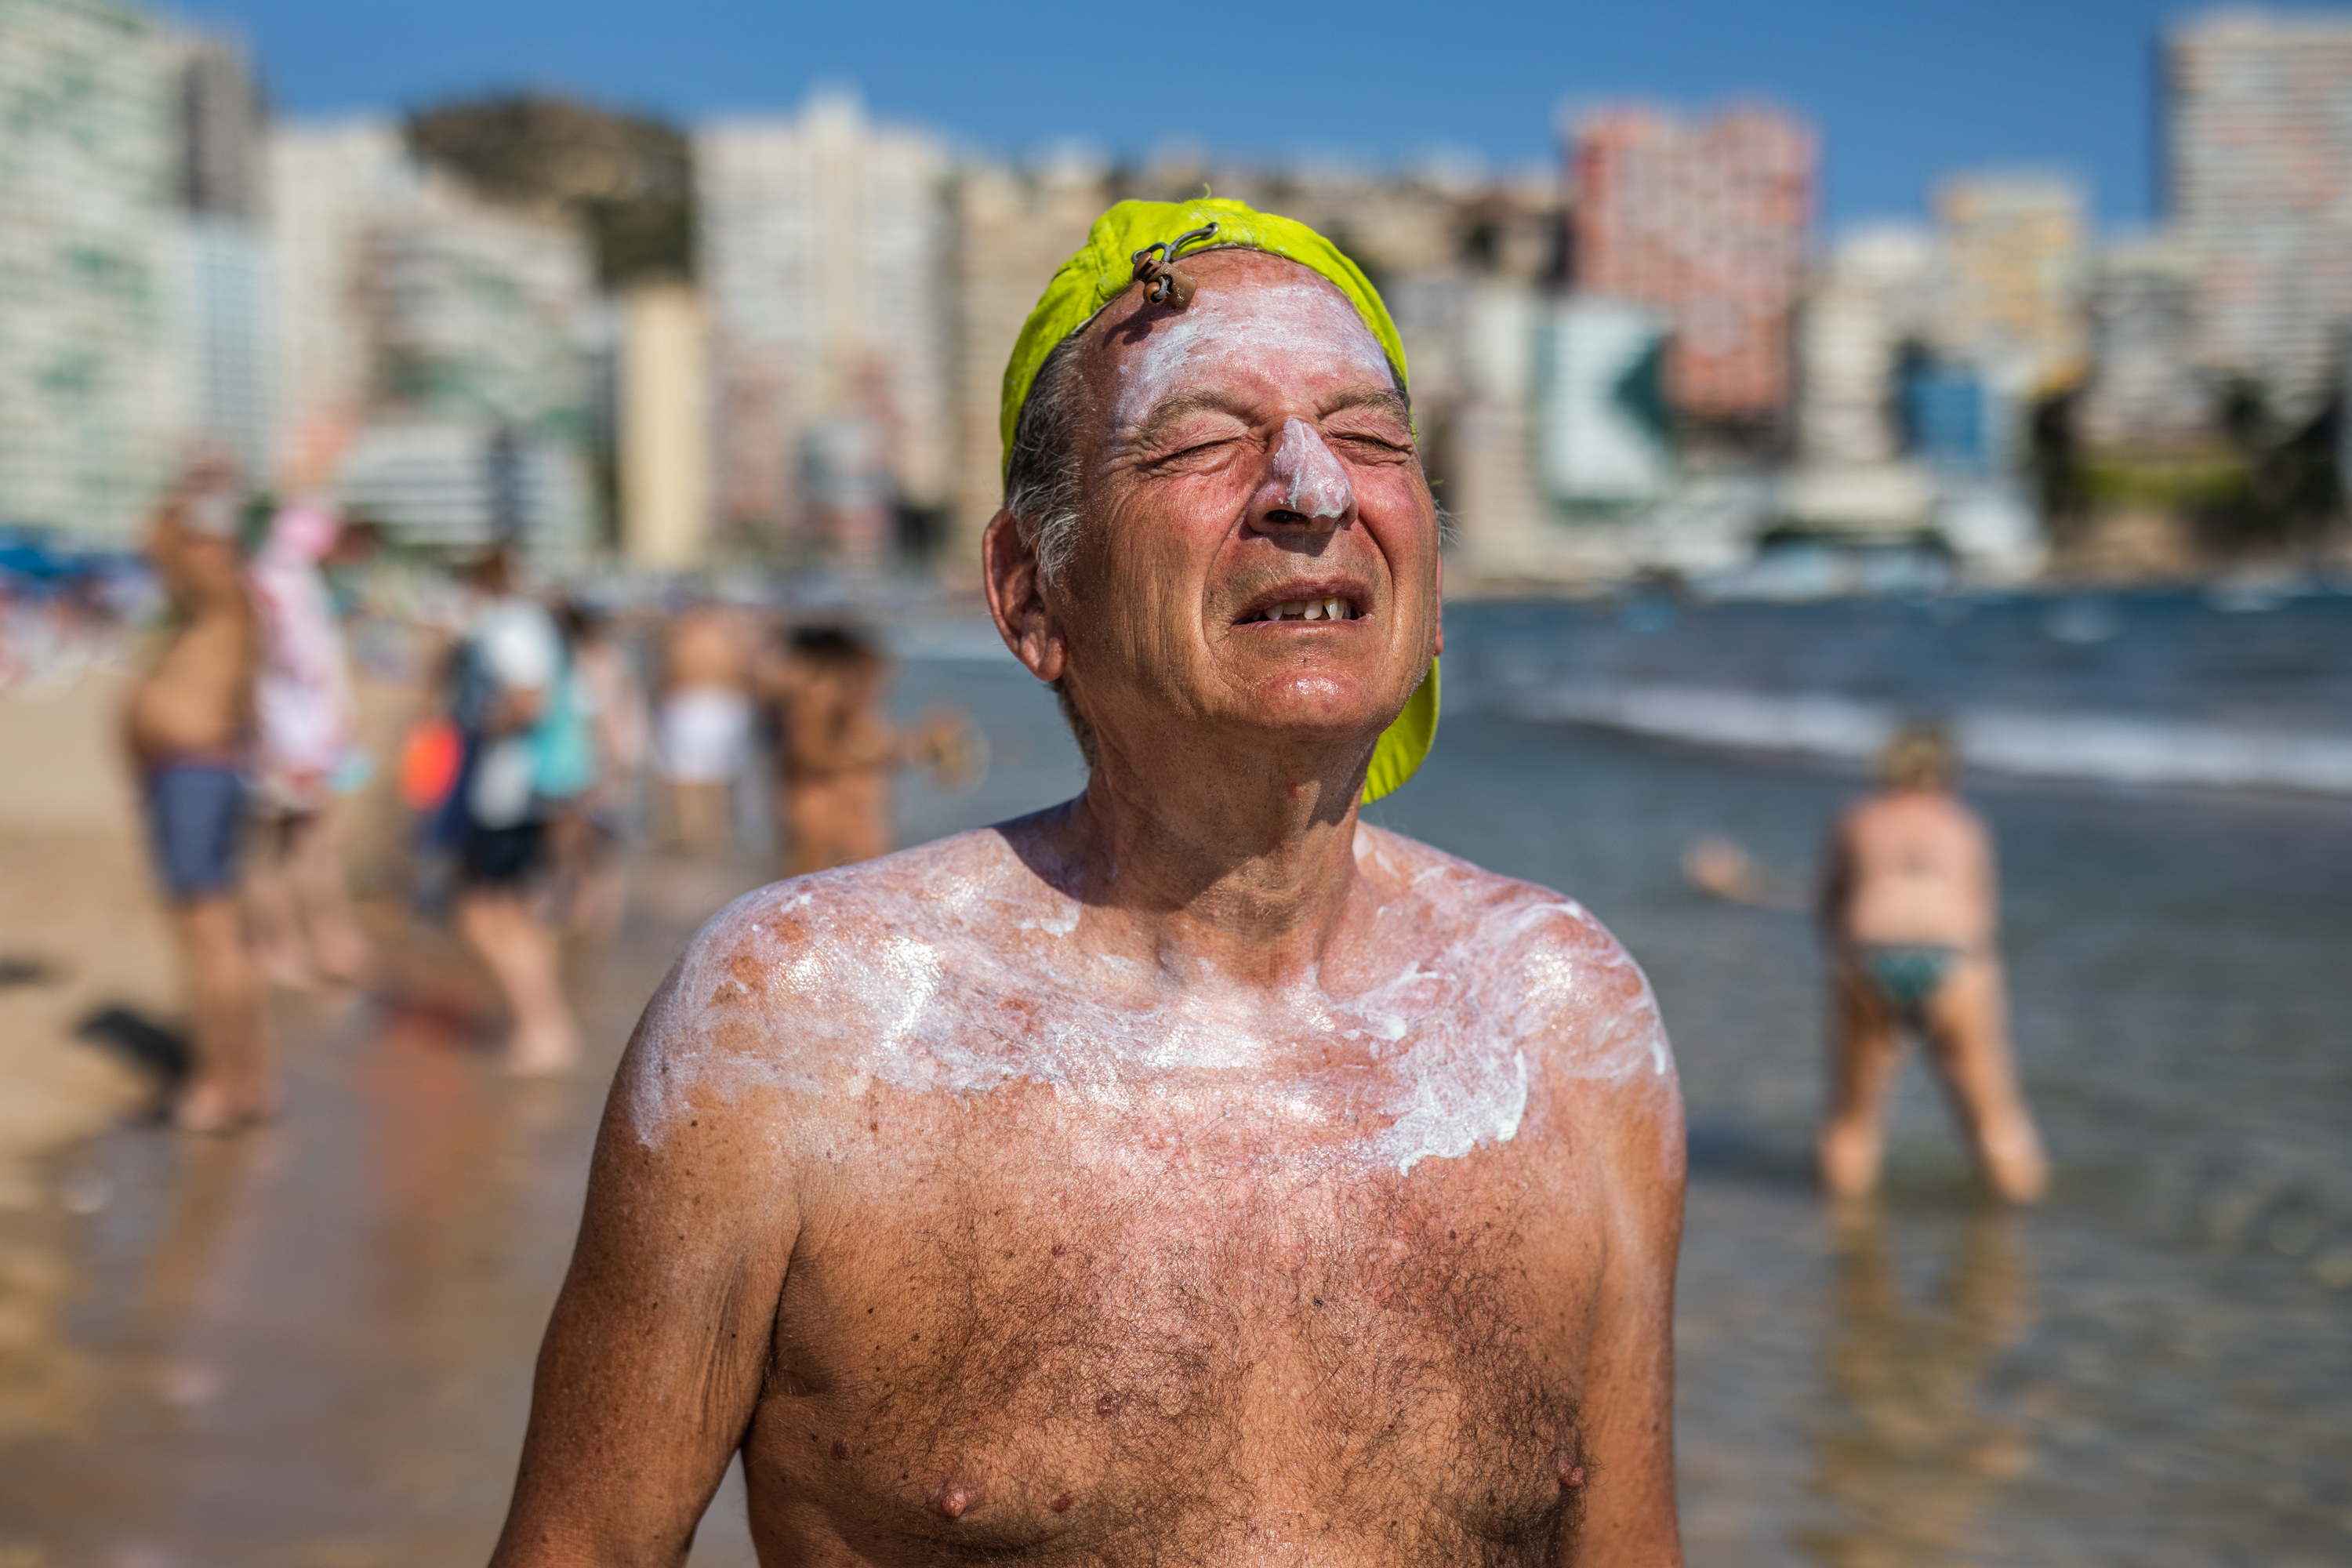 A man wears sunscreen on a beach in Spain.